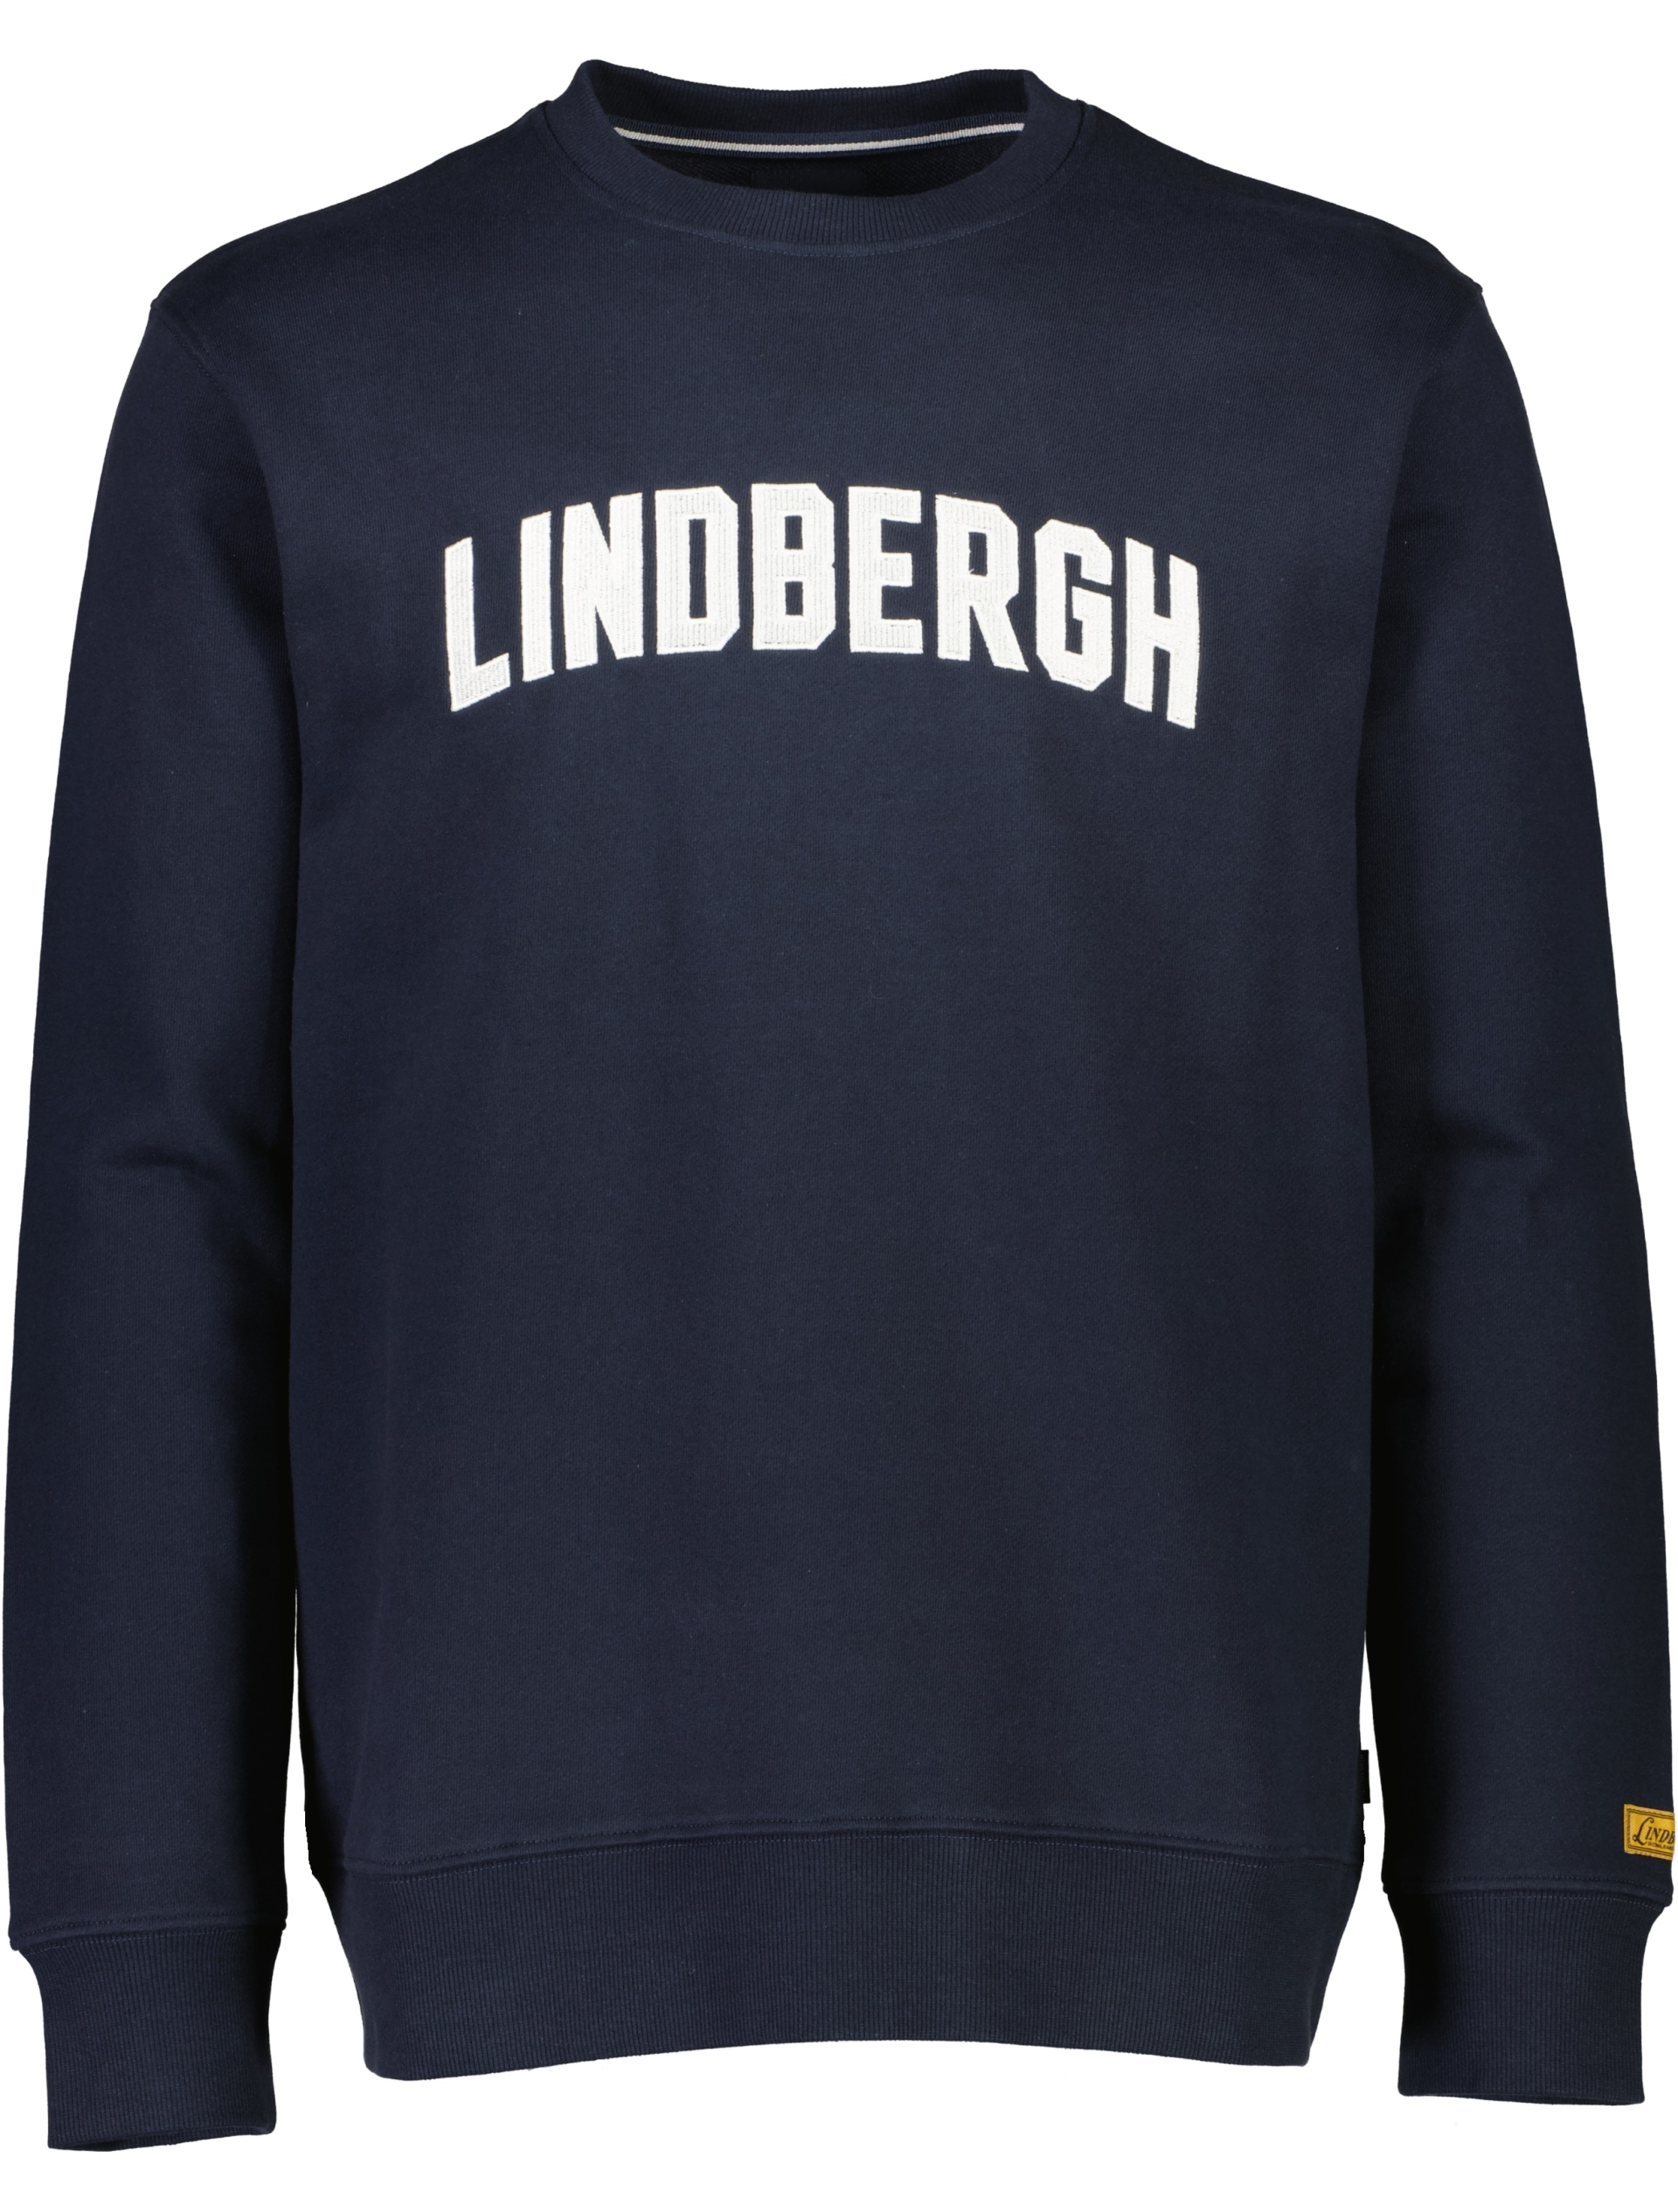 Lindbergh Sweatshirt blue / navy